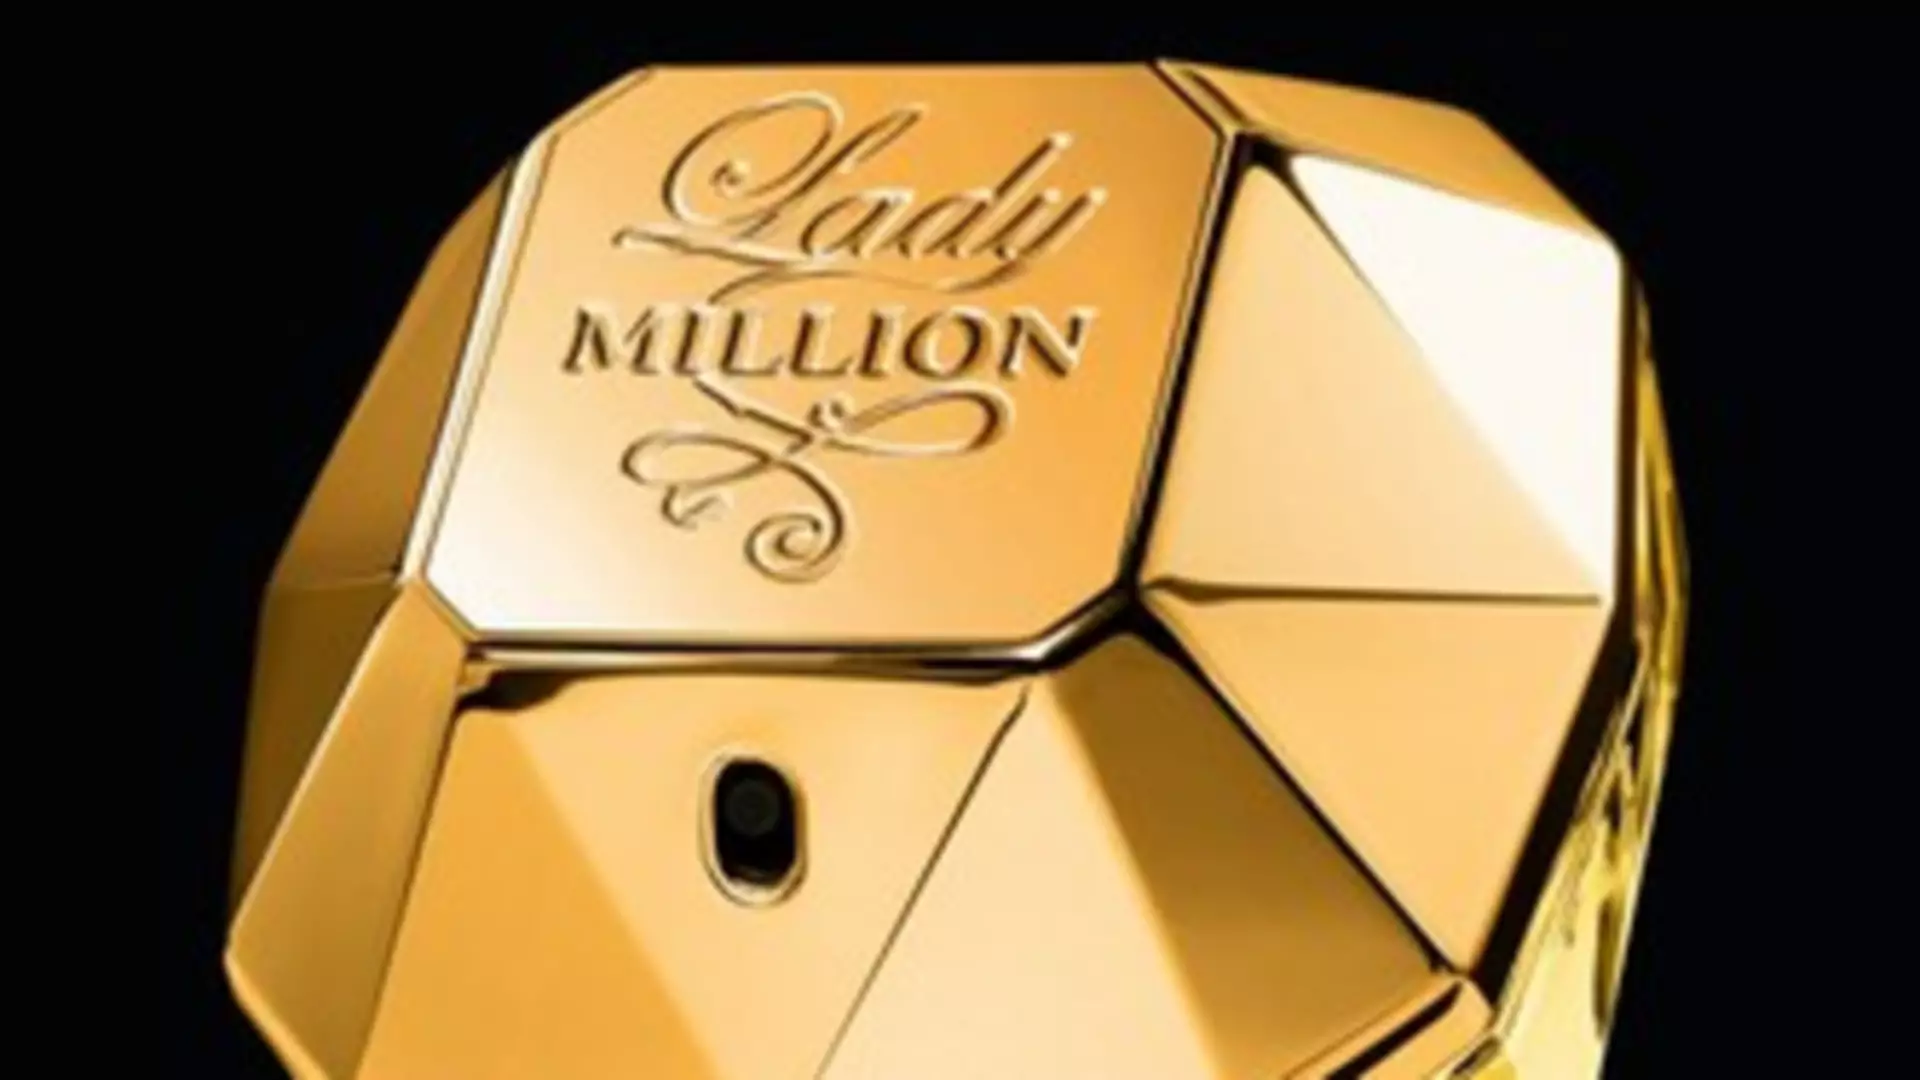 Lady Million Paco Rabanne: jak pachnie diament?